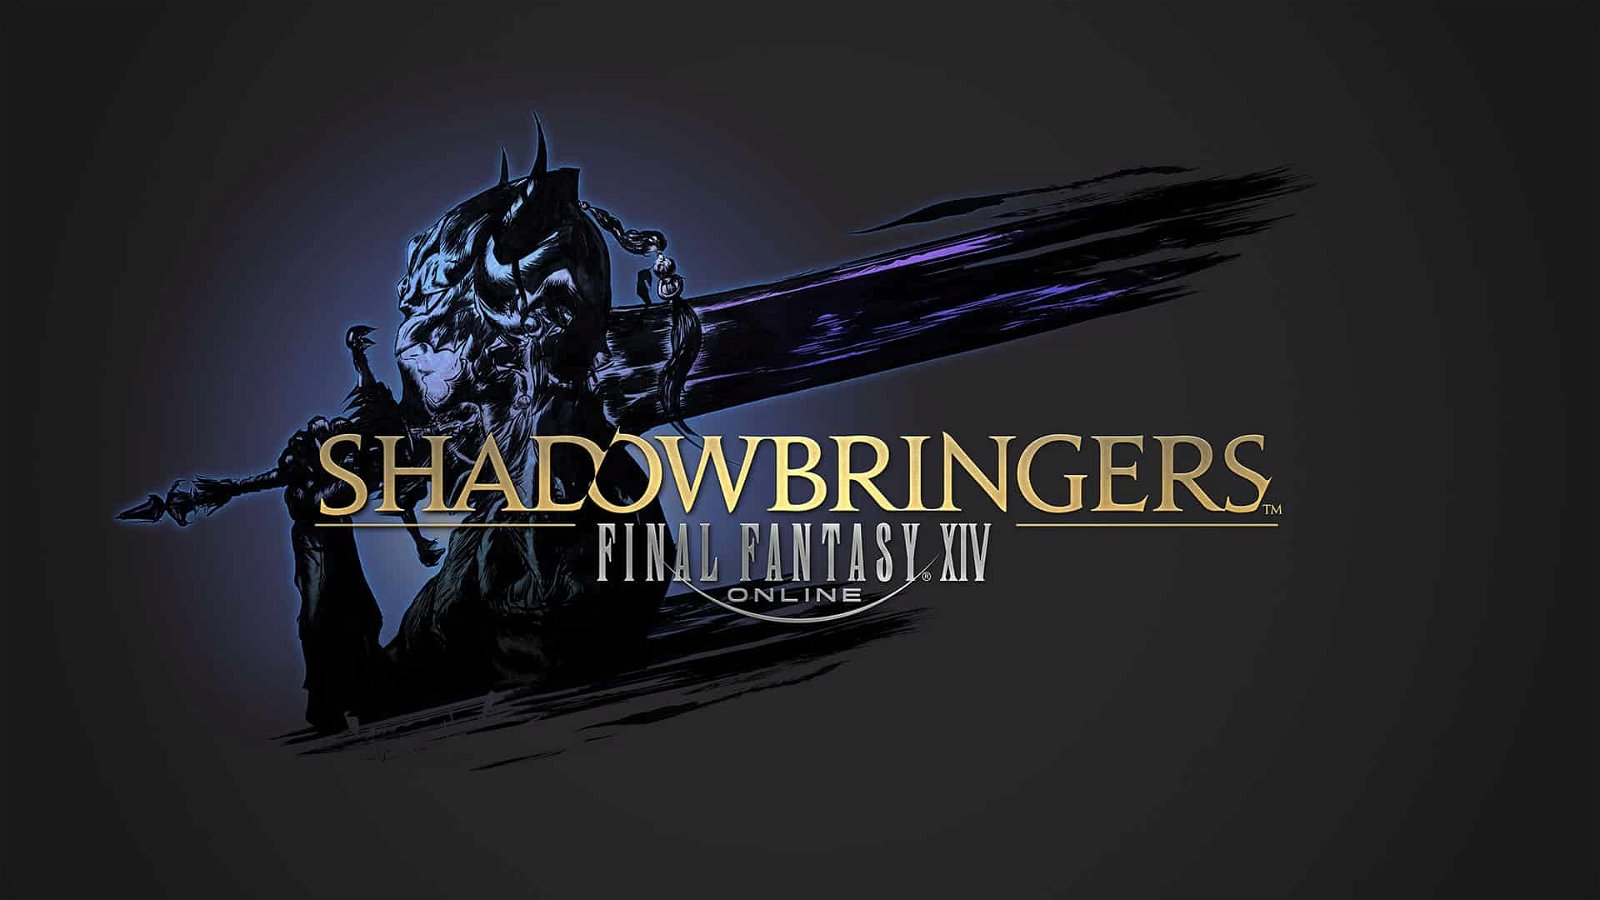 Final Fantasy XIV: Shadowbringers Expansion Coming Summer 2019 5